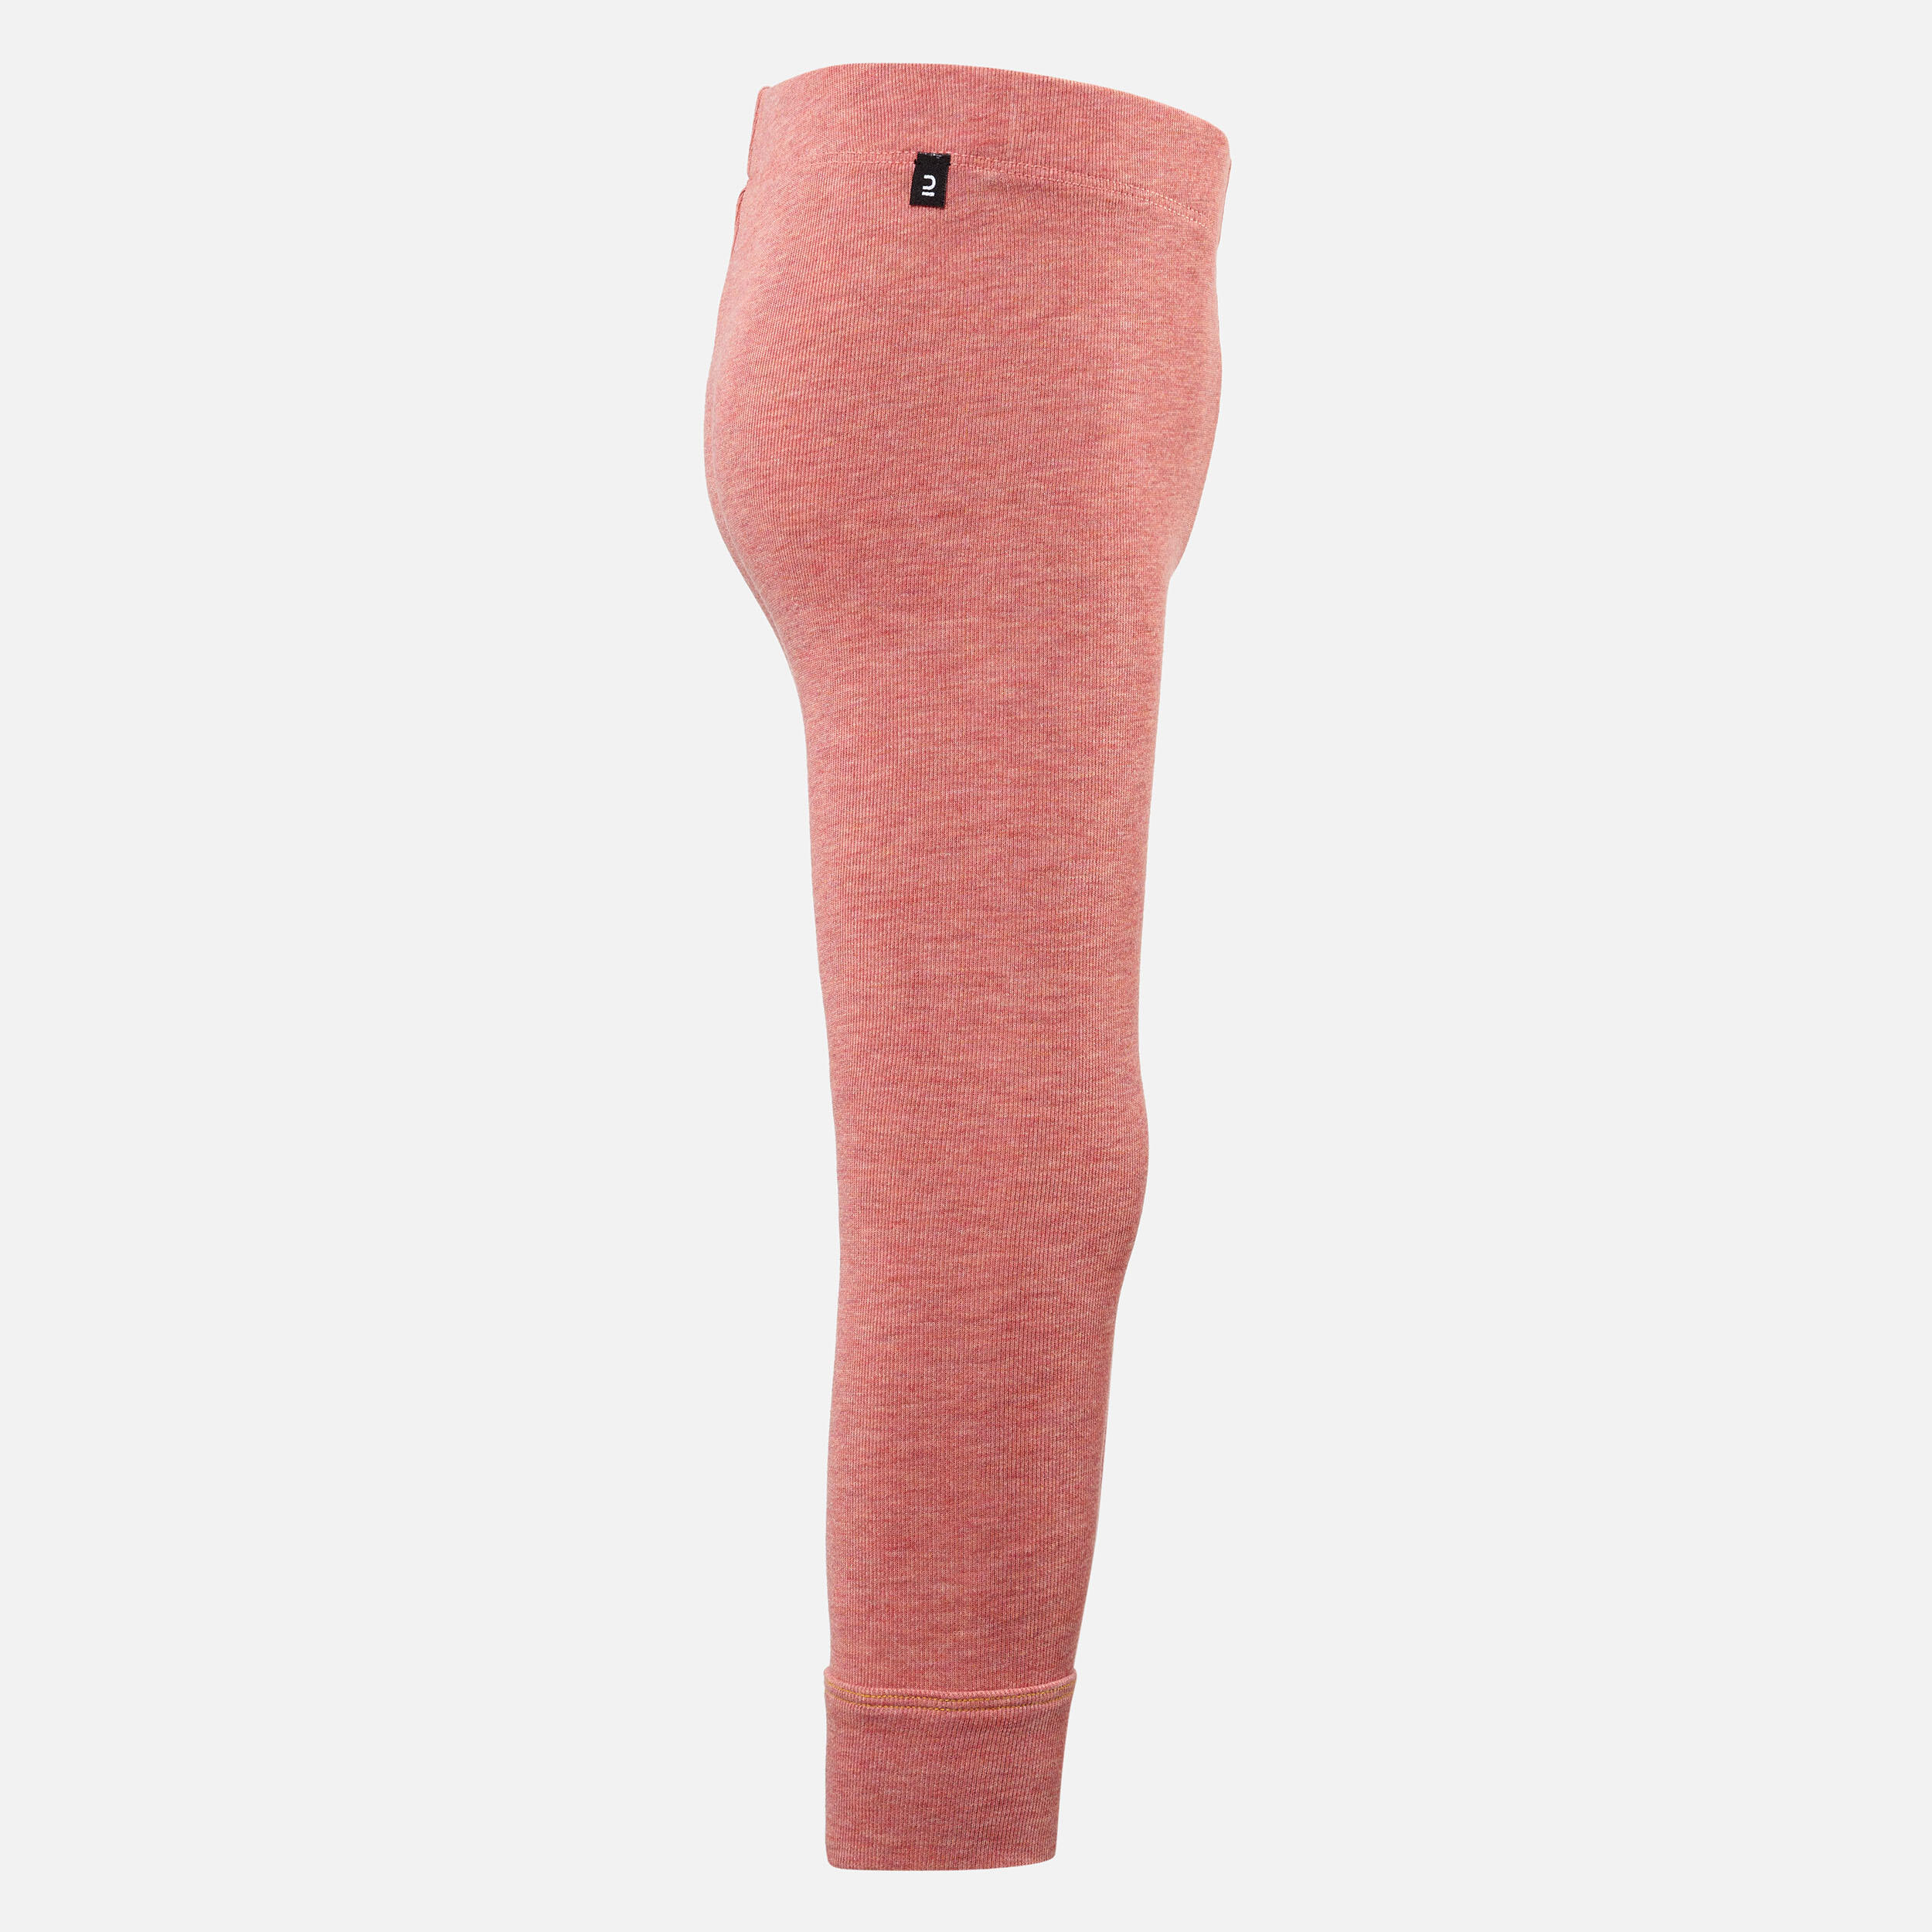 Base layer trousers, Baby ski leggings - WARM pink 5/7